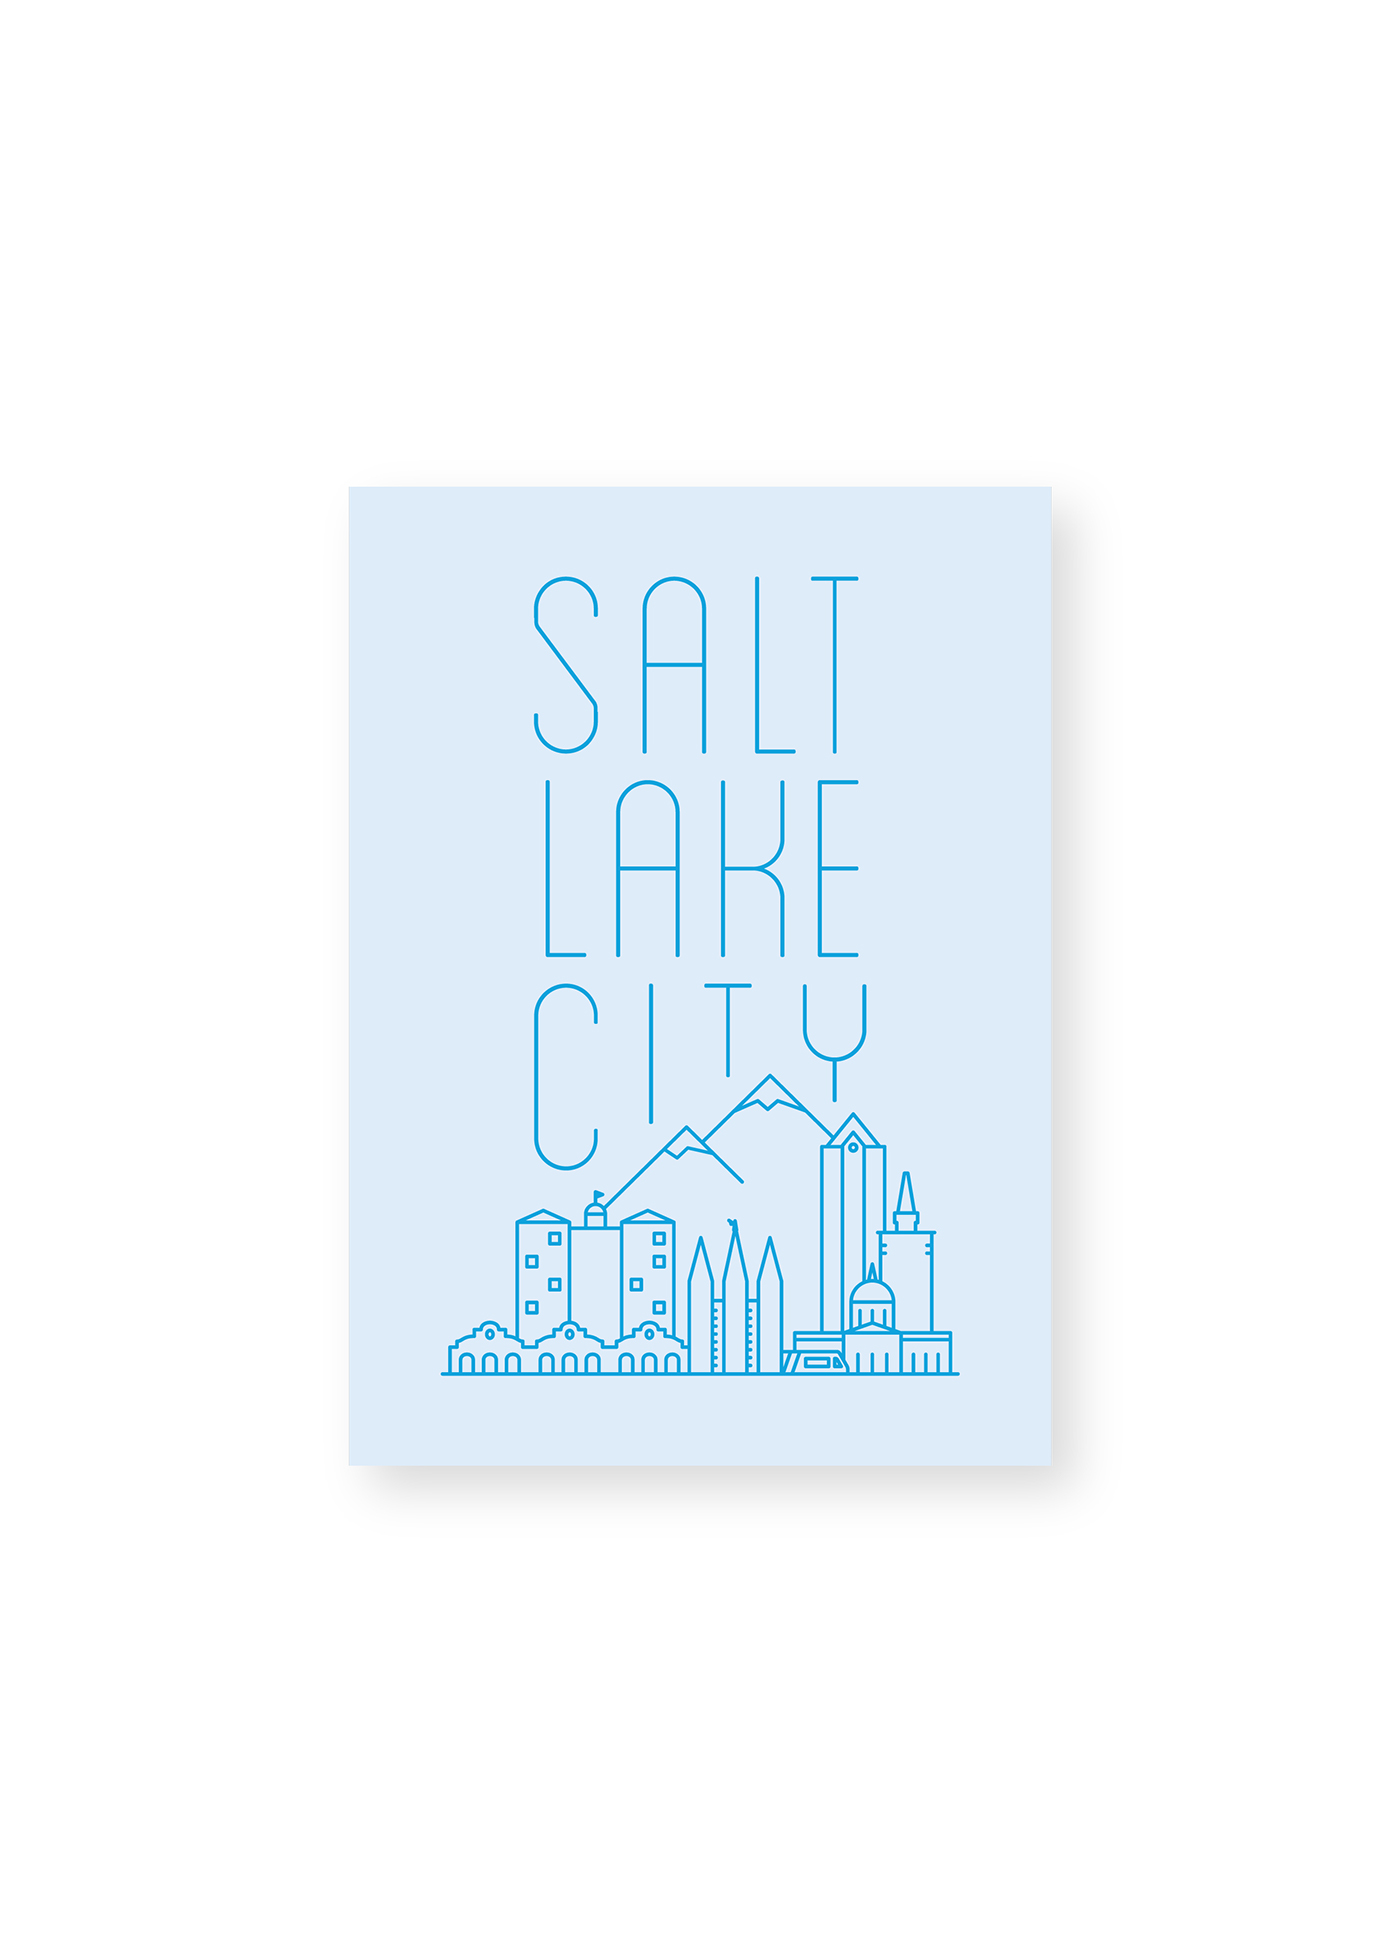 screen printing Salt Lake City linecraft trax city Linescape cityscape skyline lline utah card print hand printed